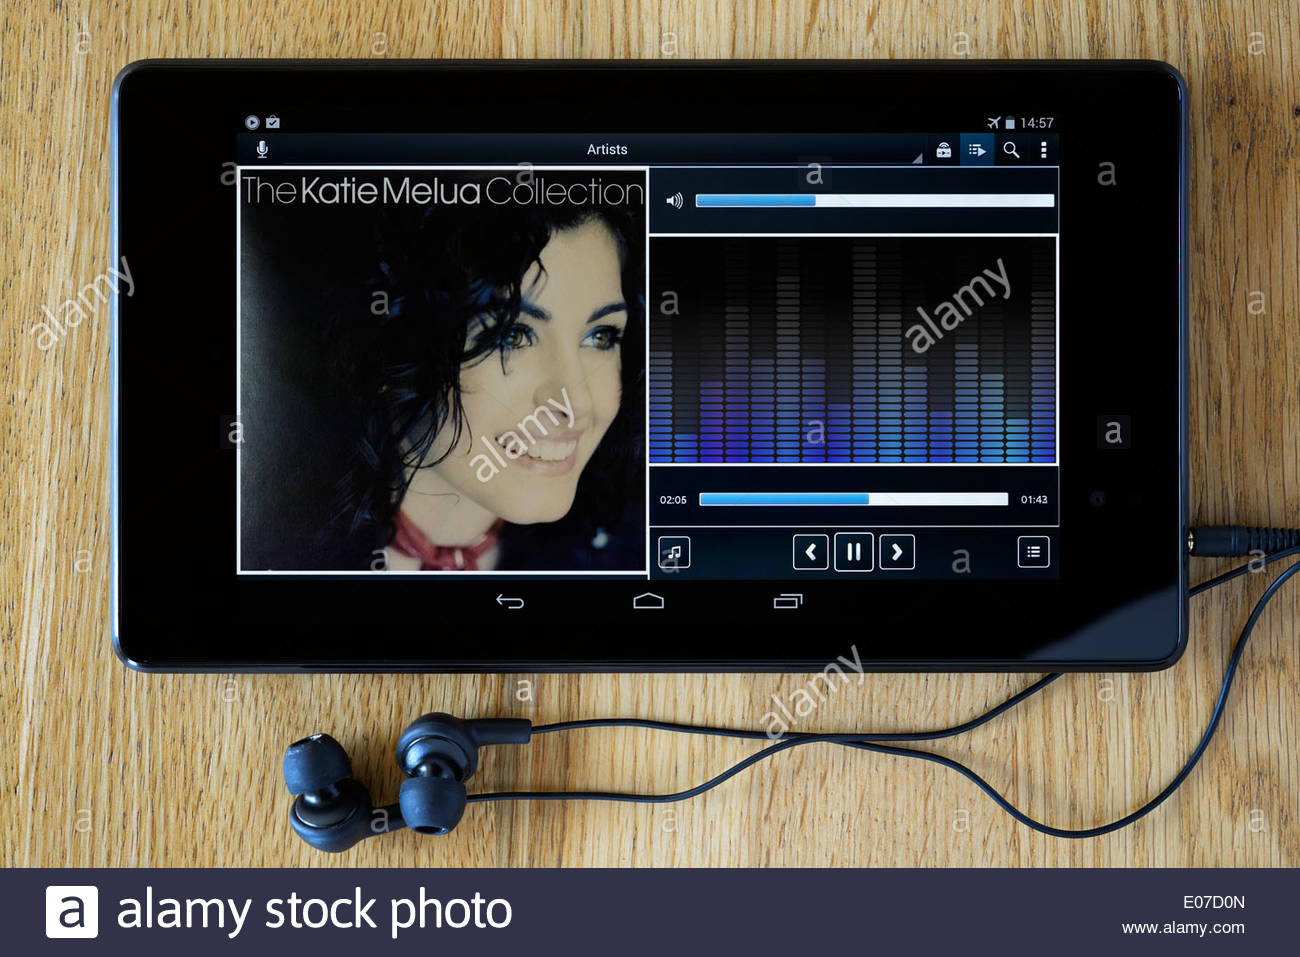 Katie Melua MP3 album art on PC tablet, England Stock Photo - Alamy